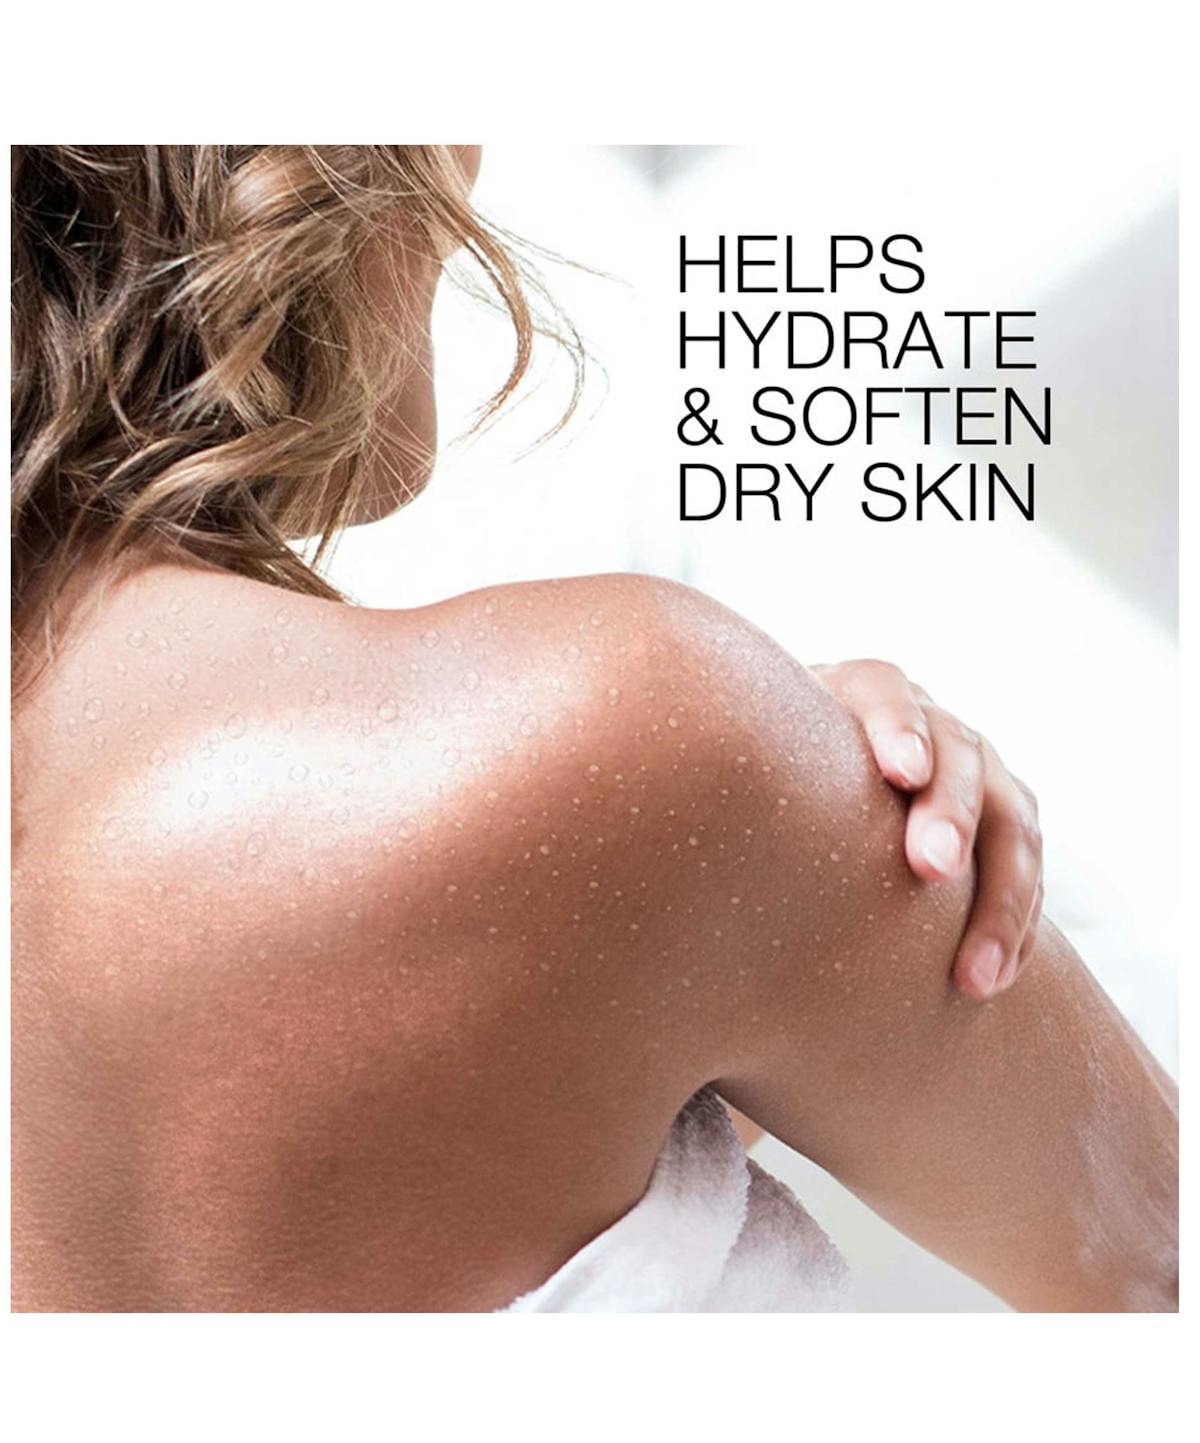 Body Oil - Light Sesame Formula To Hydrate Dry Skin